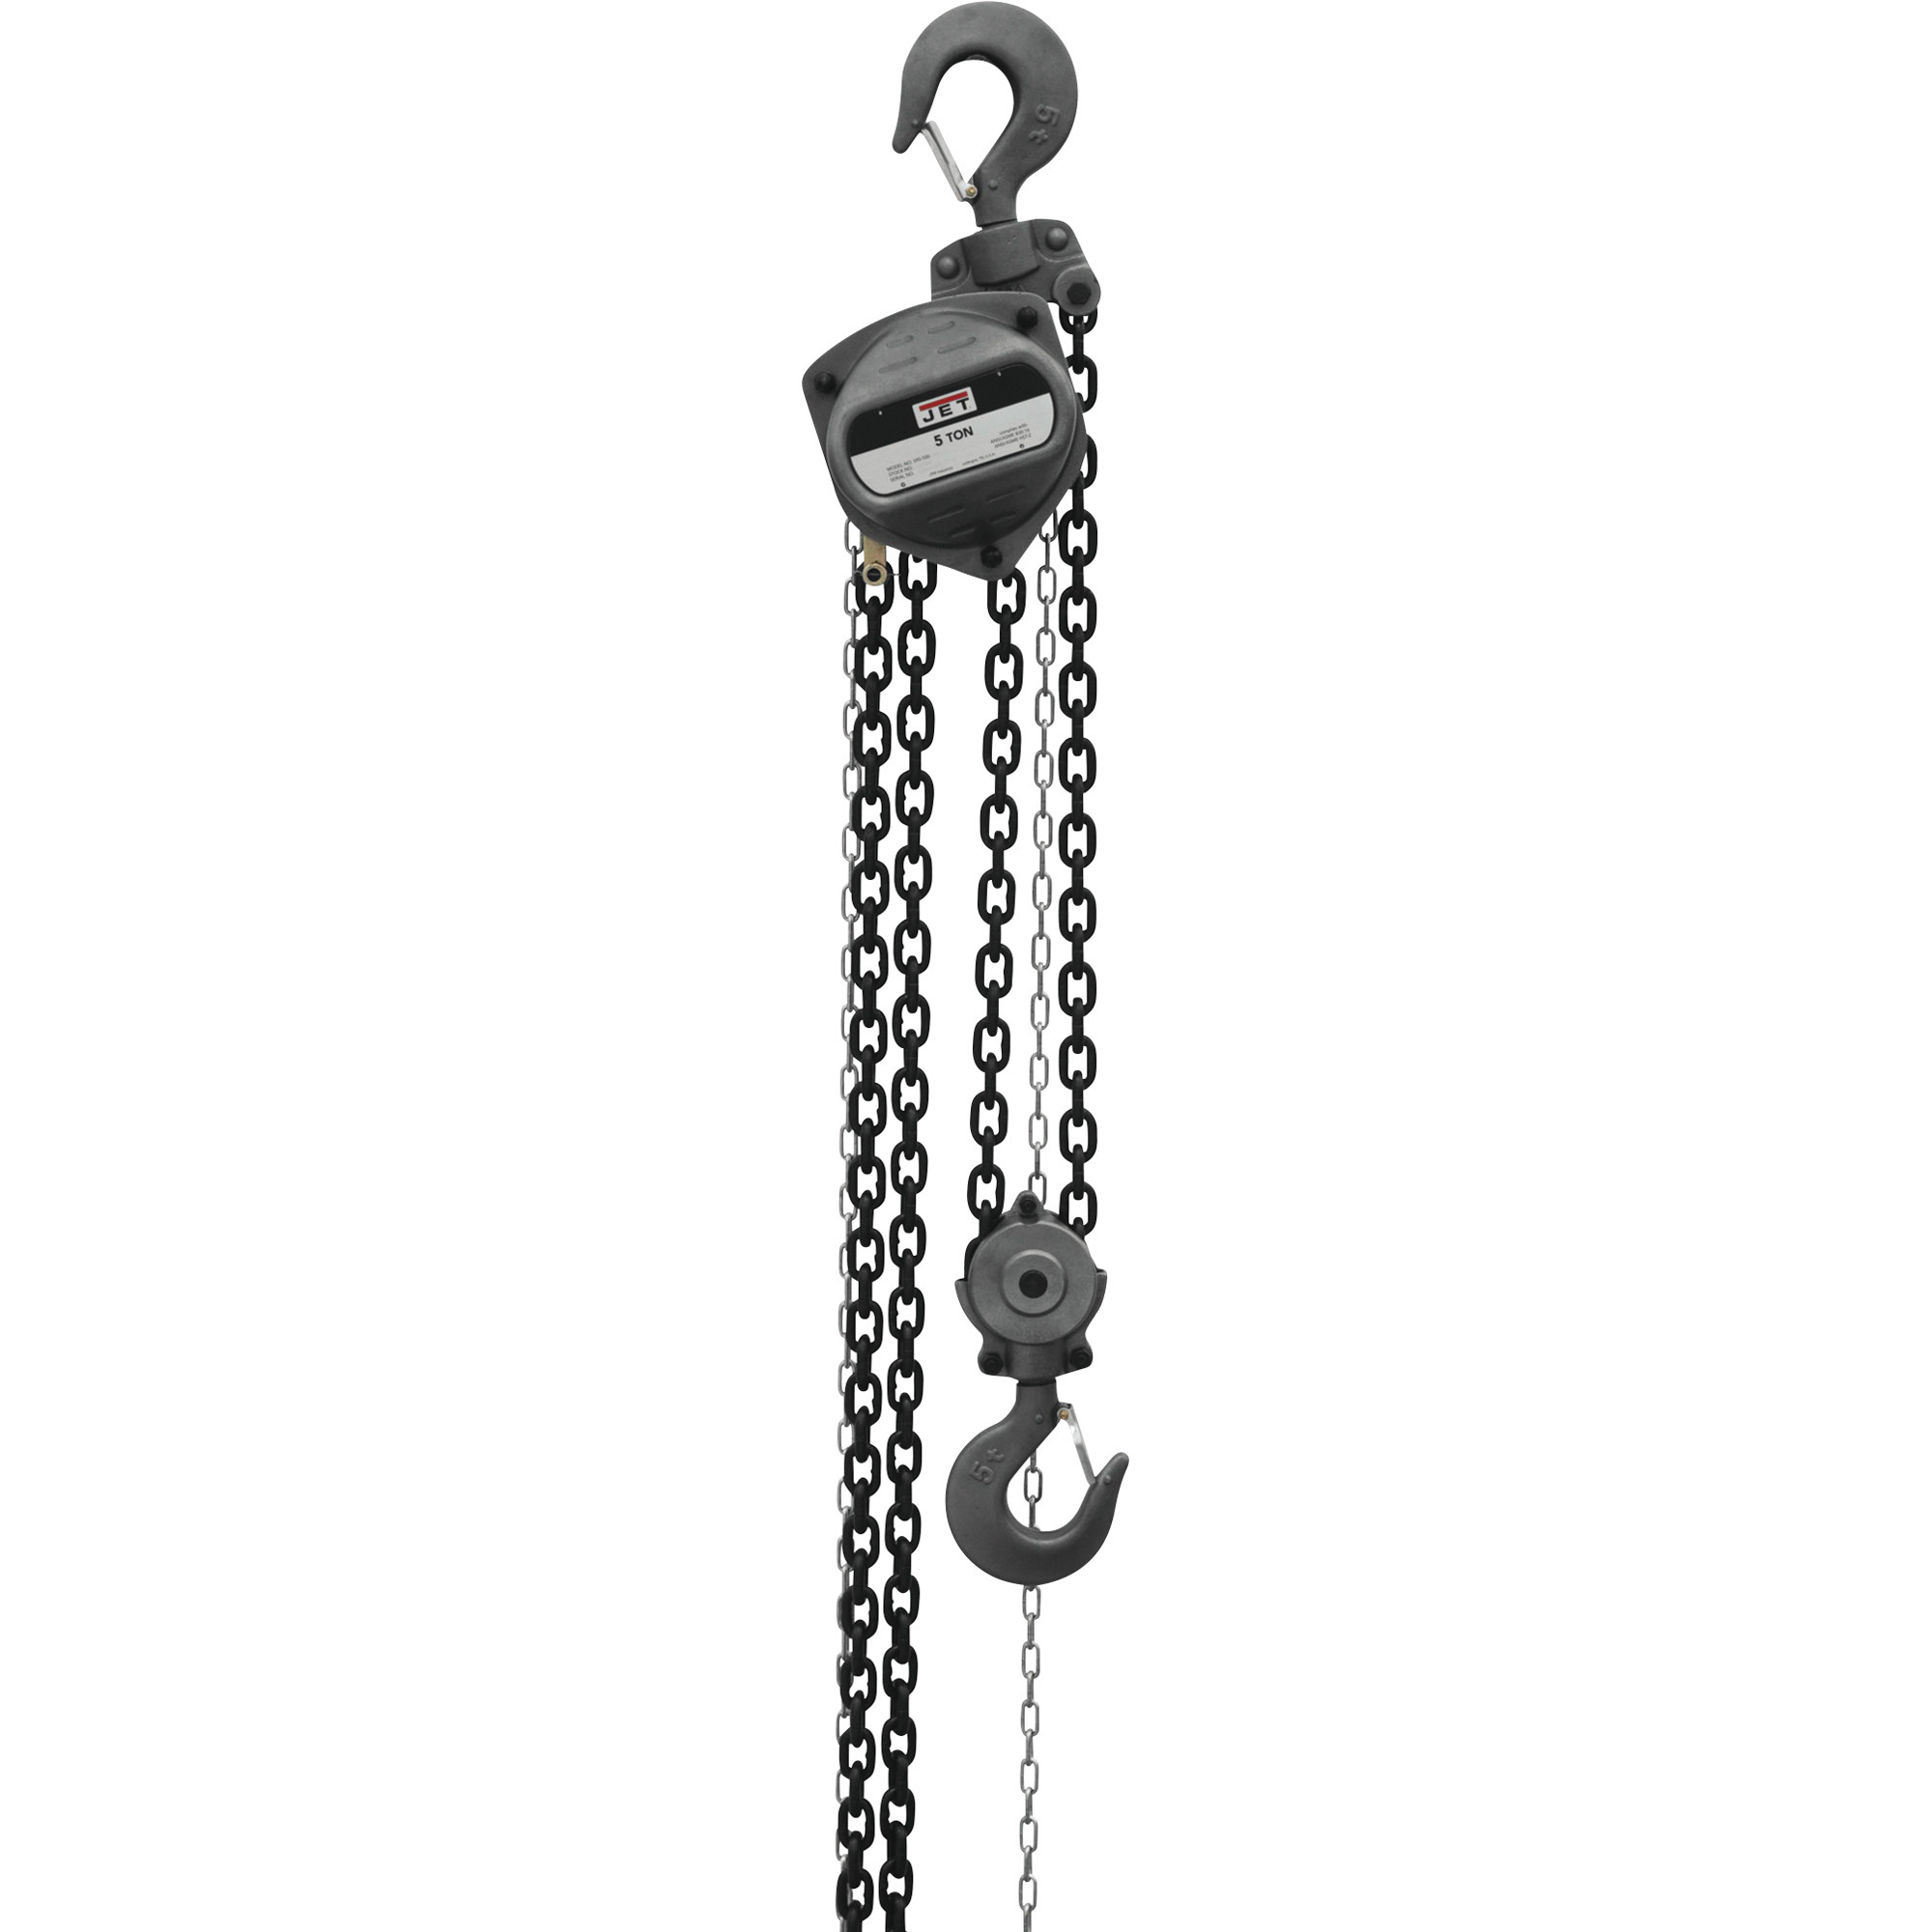 JET S90 Series Manual Chain Hoist, 5-Ton Capacity, 20ft. Lift, Model S90-500-20